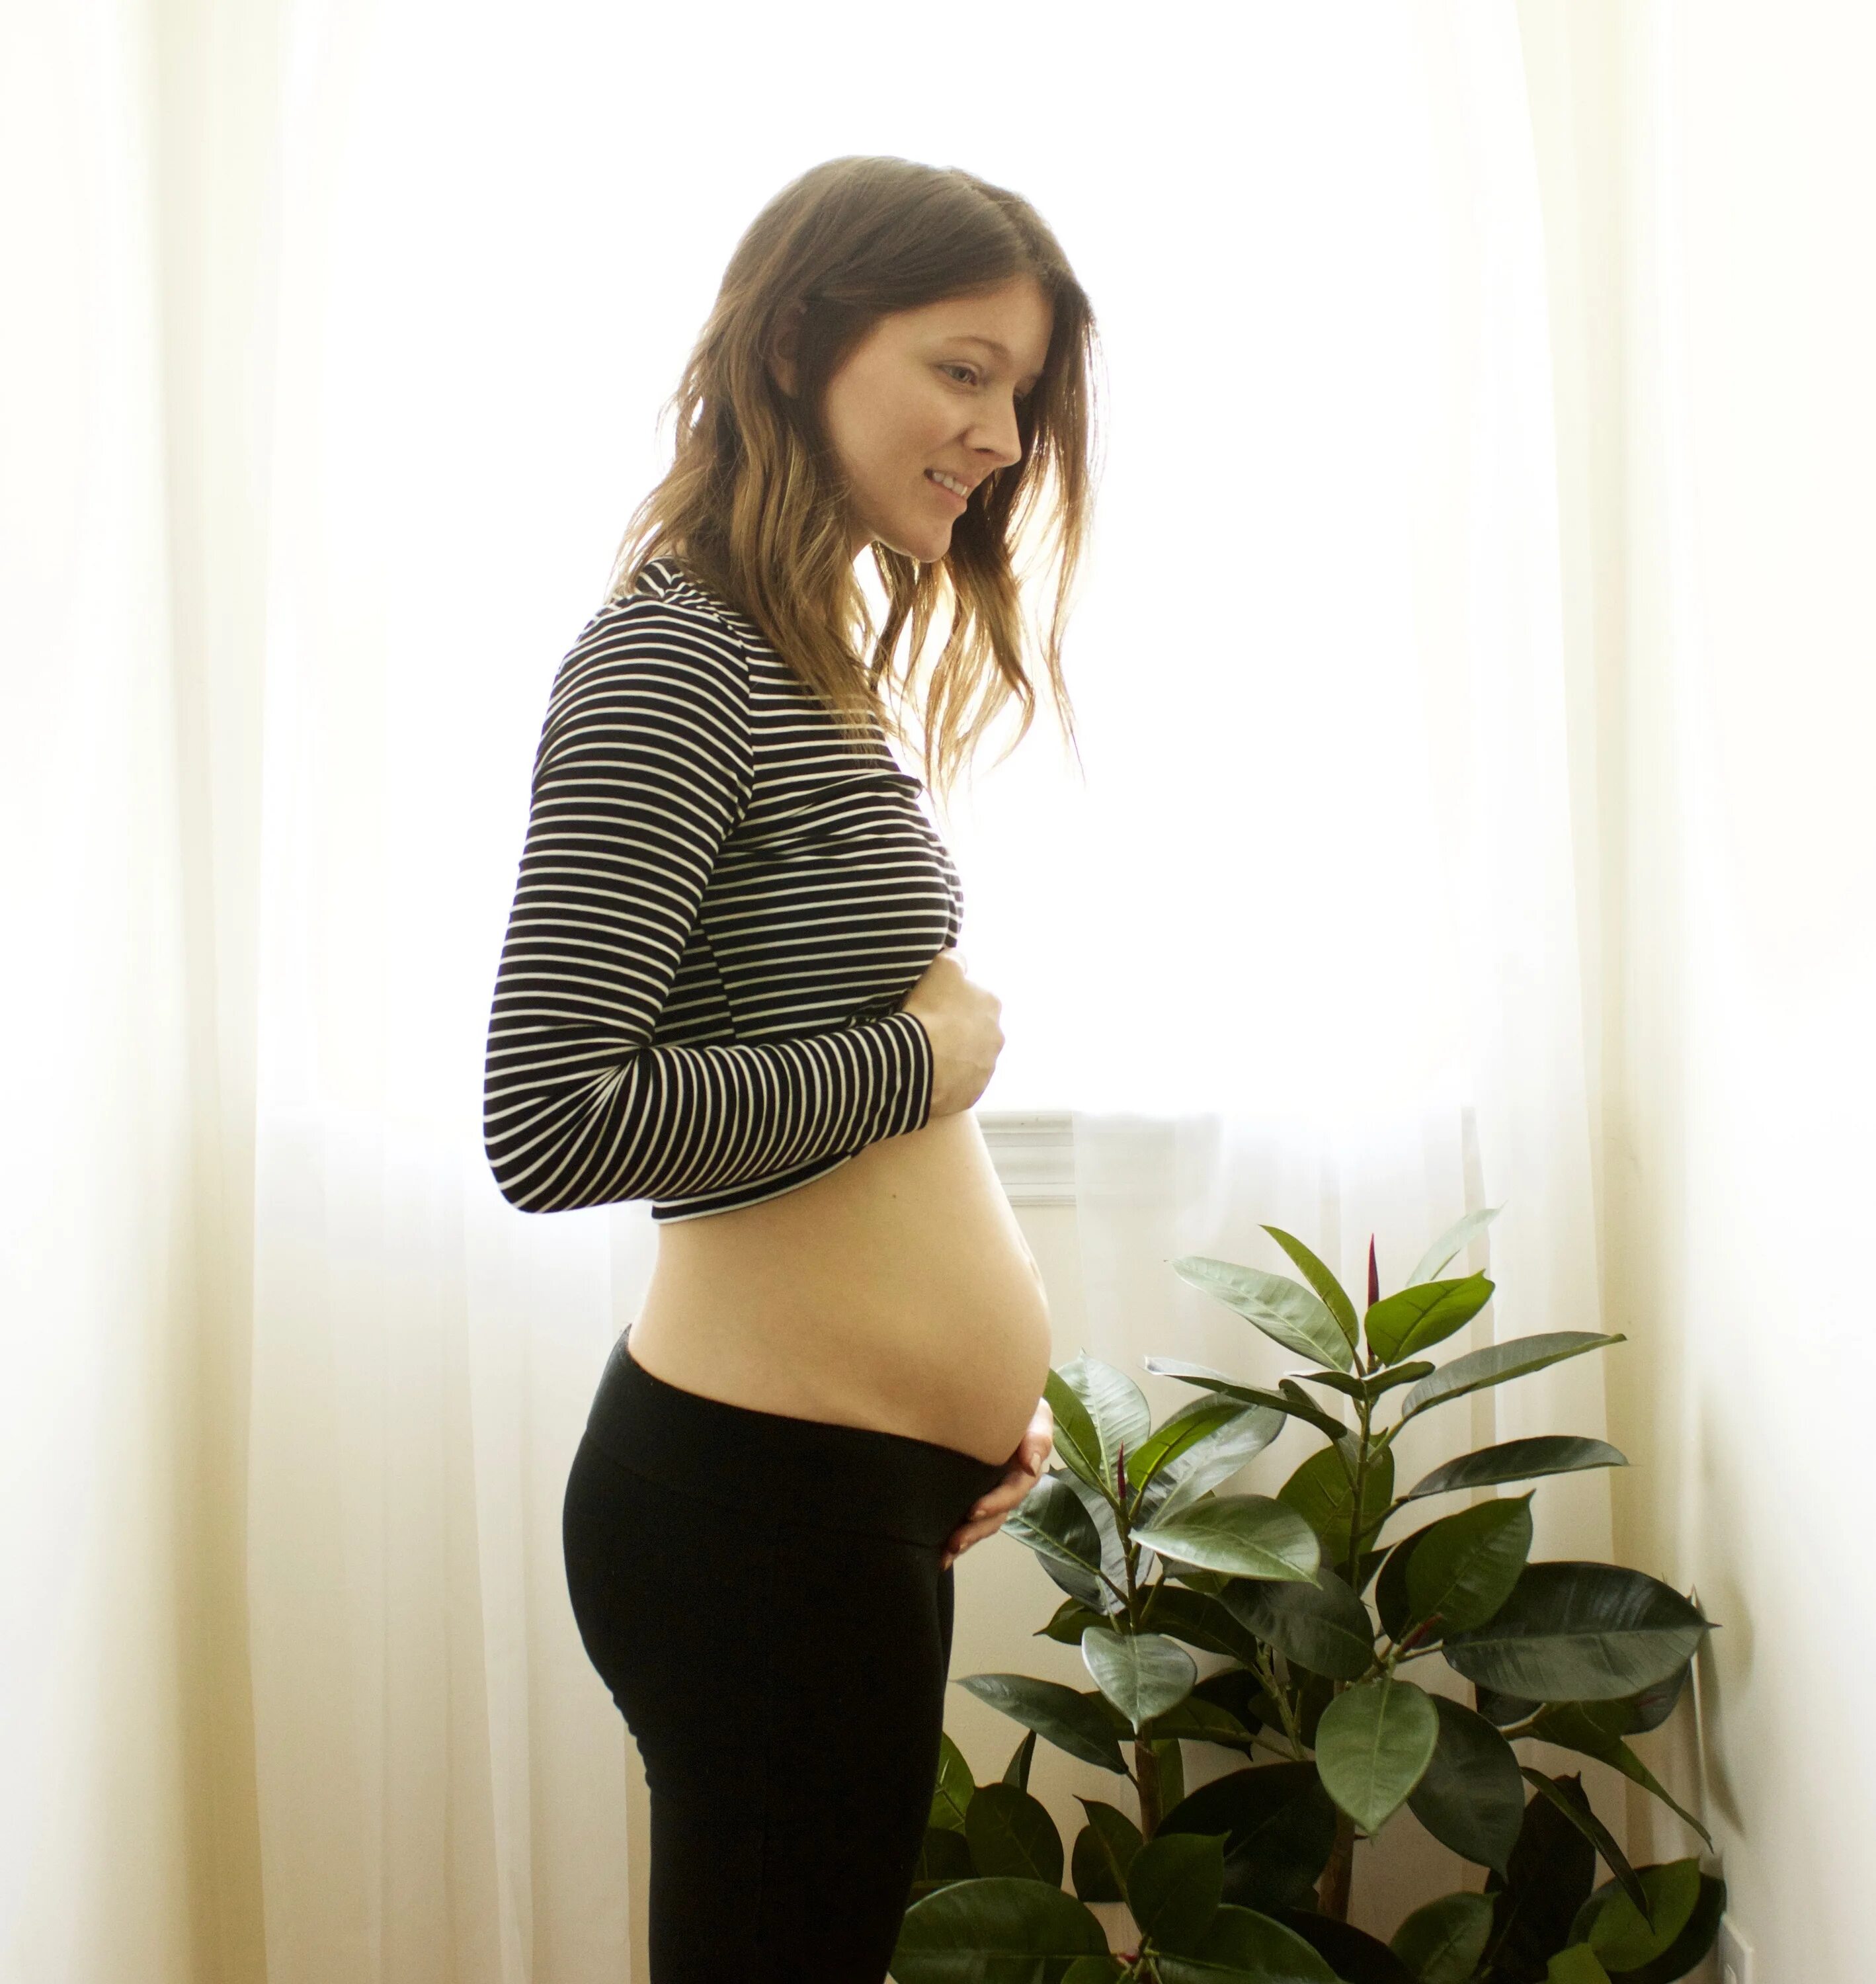 Pregnant belly 16 weeks. Pregnant 12 weeks. 3 Месяц беременности. 13 неделя коричневые